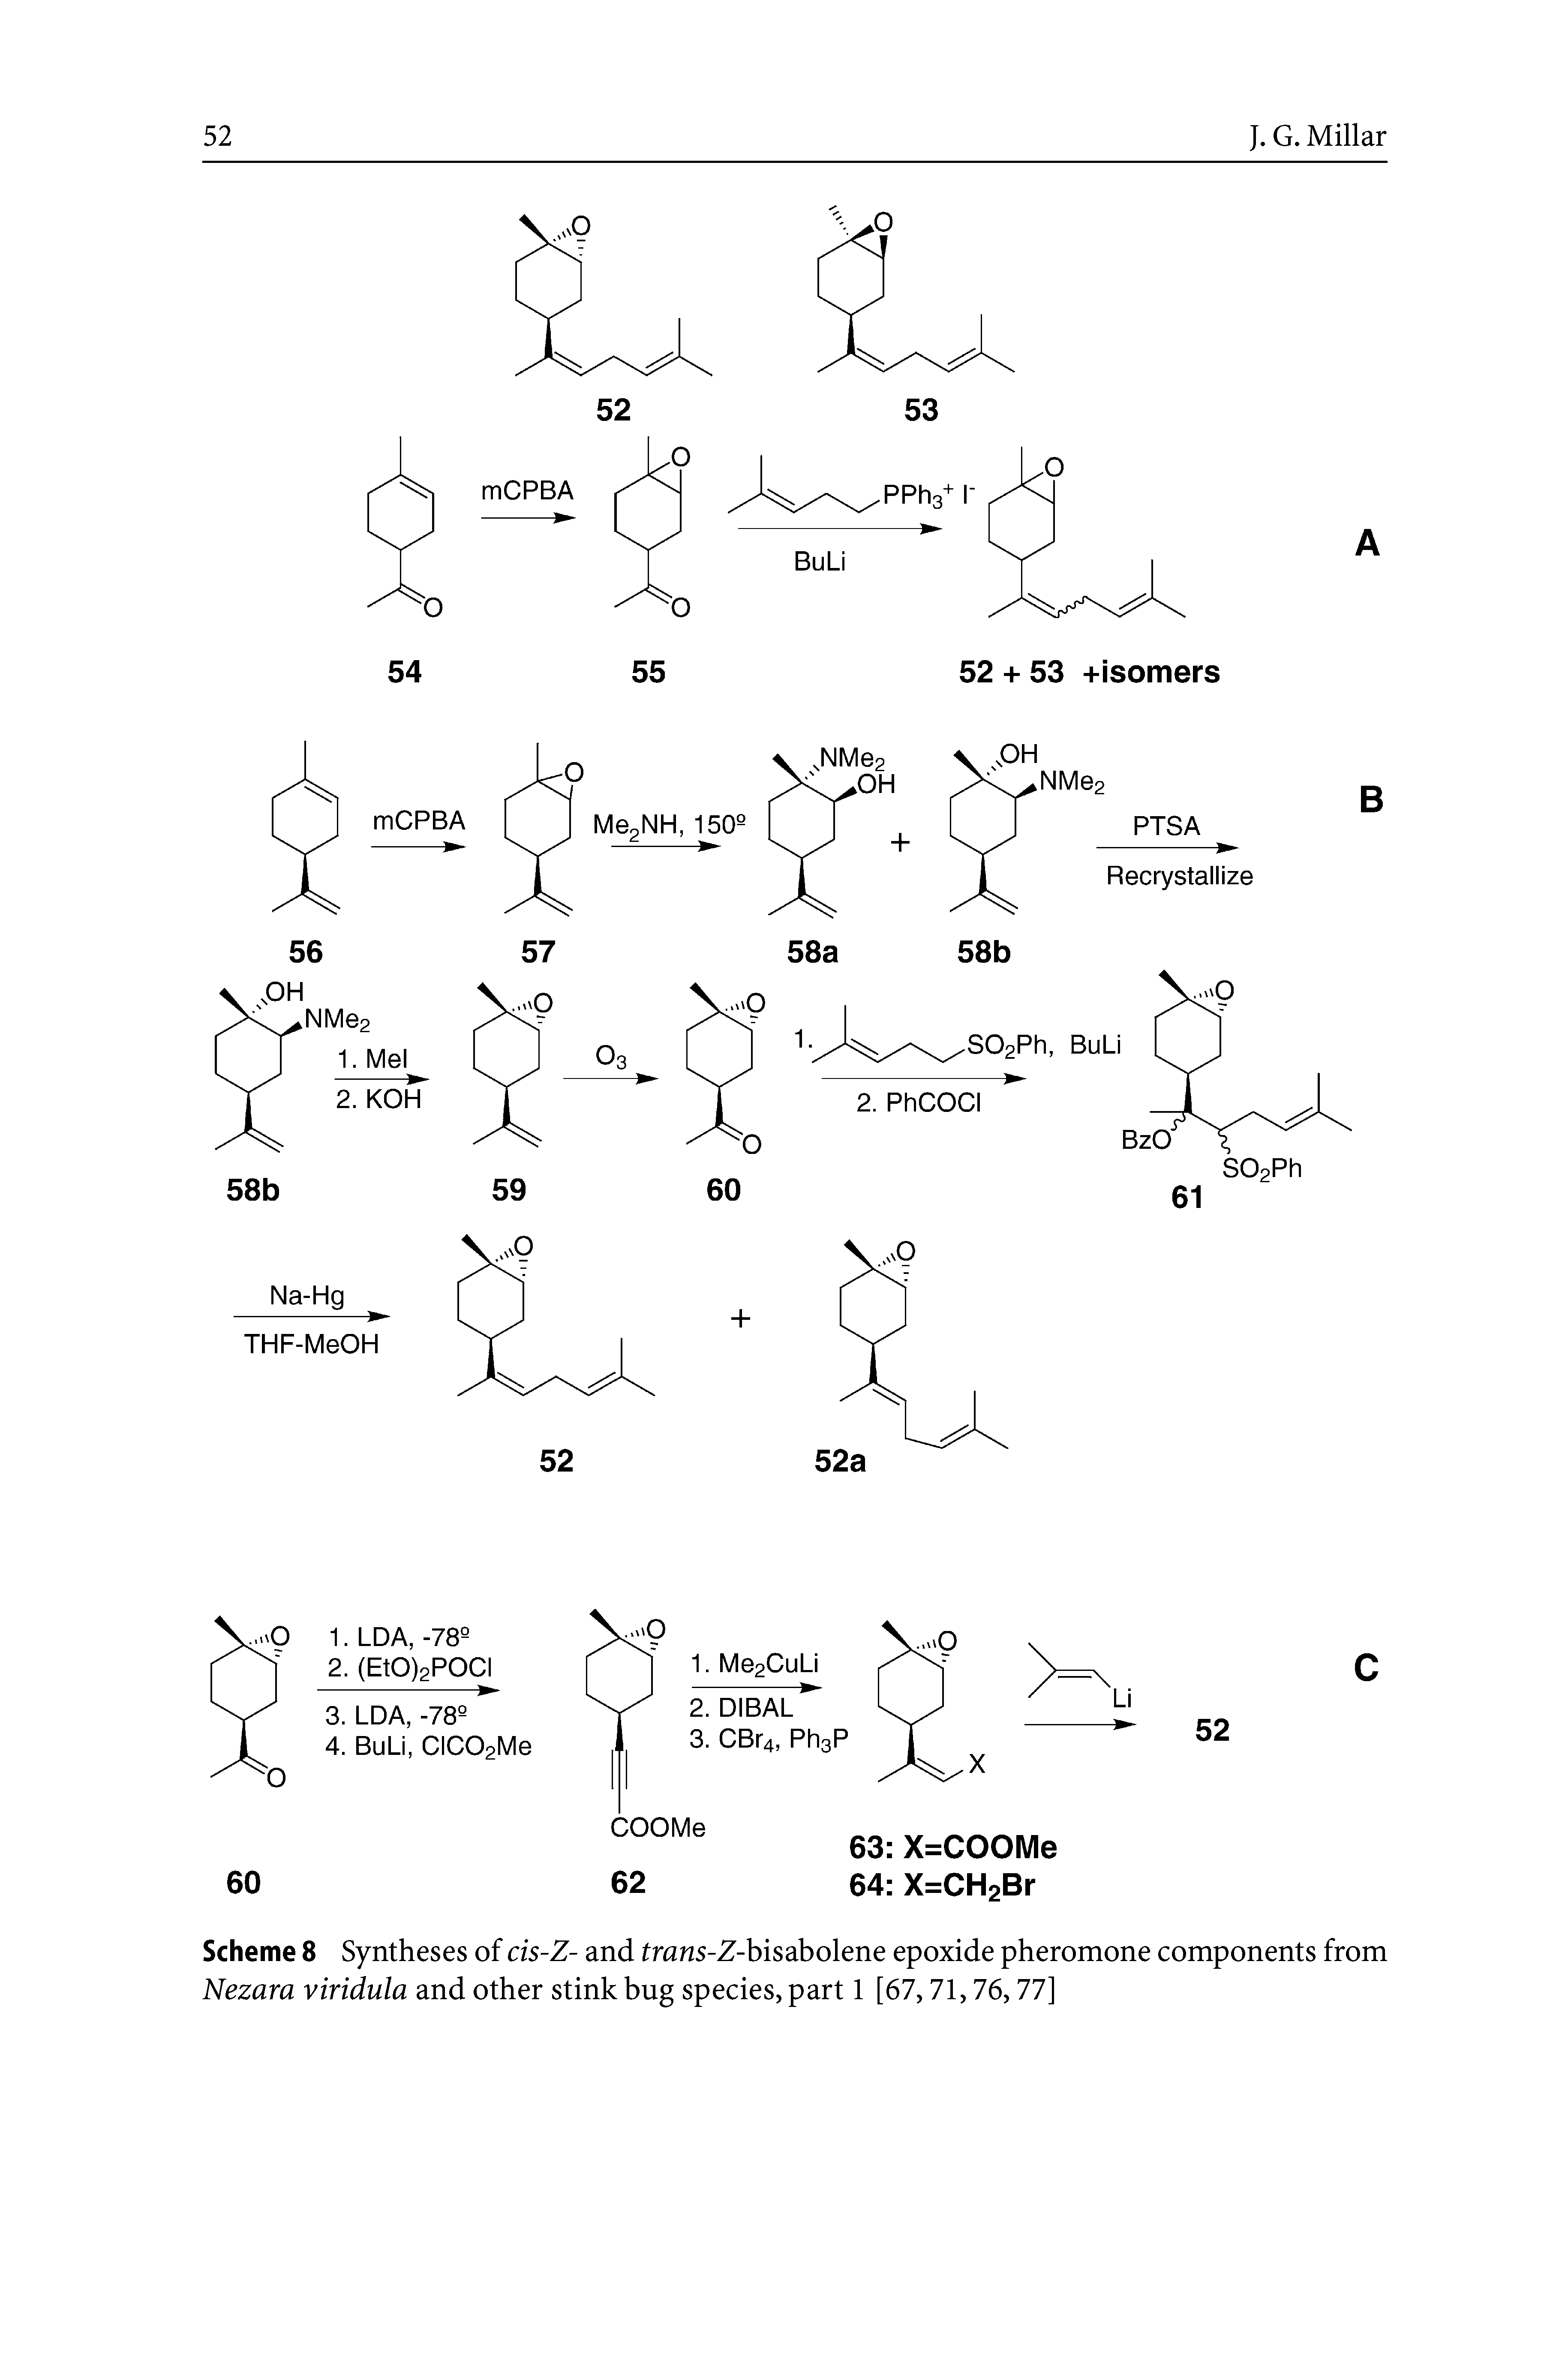 Scheme 8 Syntheses of cis-Z- and Jrans-Z-bisabolene epoxide pheromone components from Nezara viridula and other stink bug species, part 1 [67,71,76,77]...